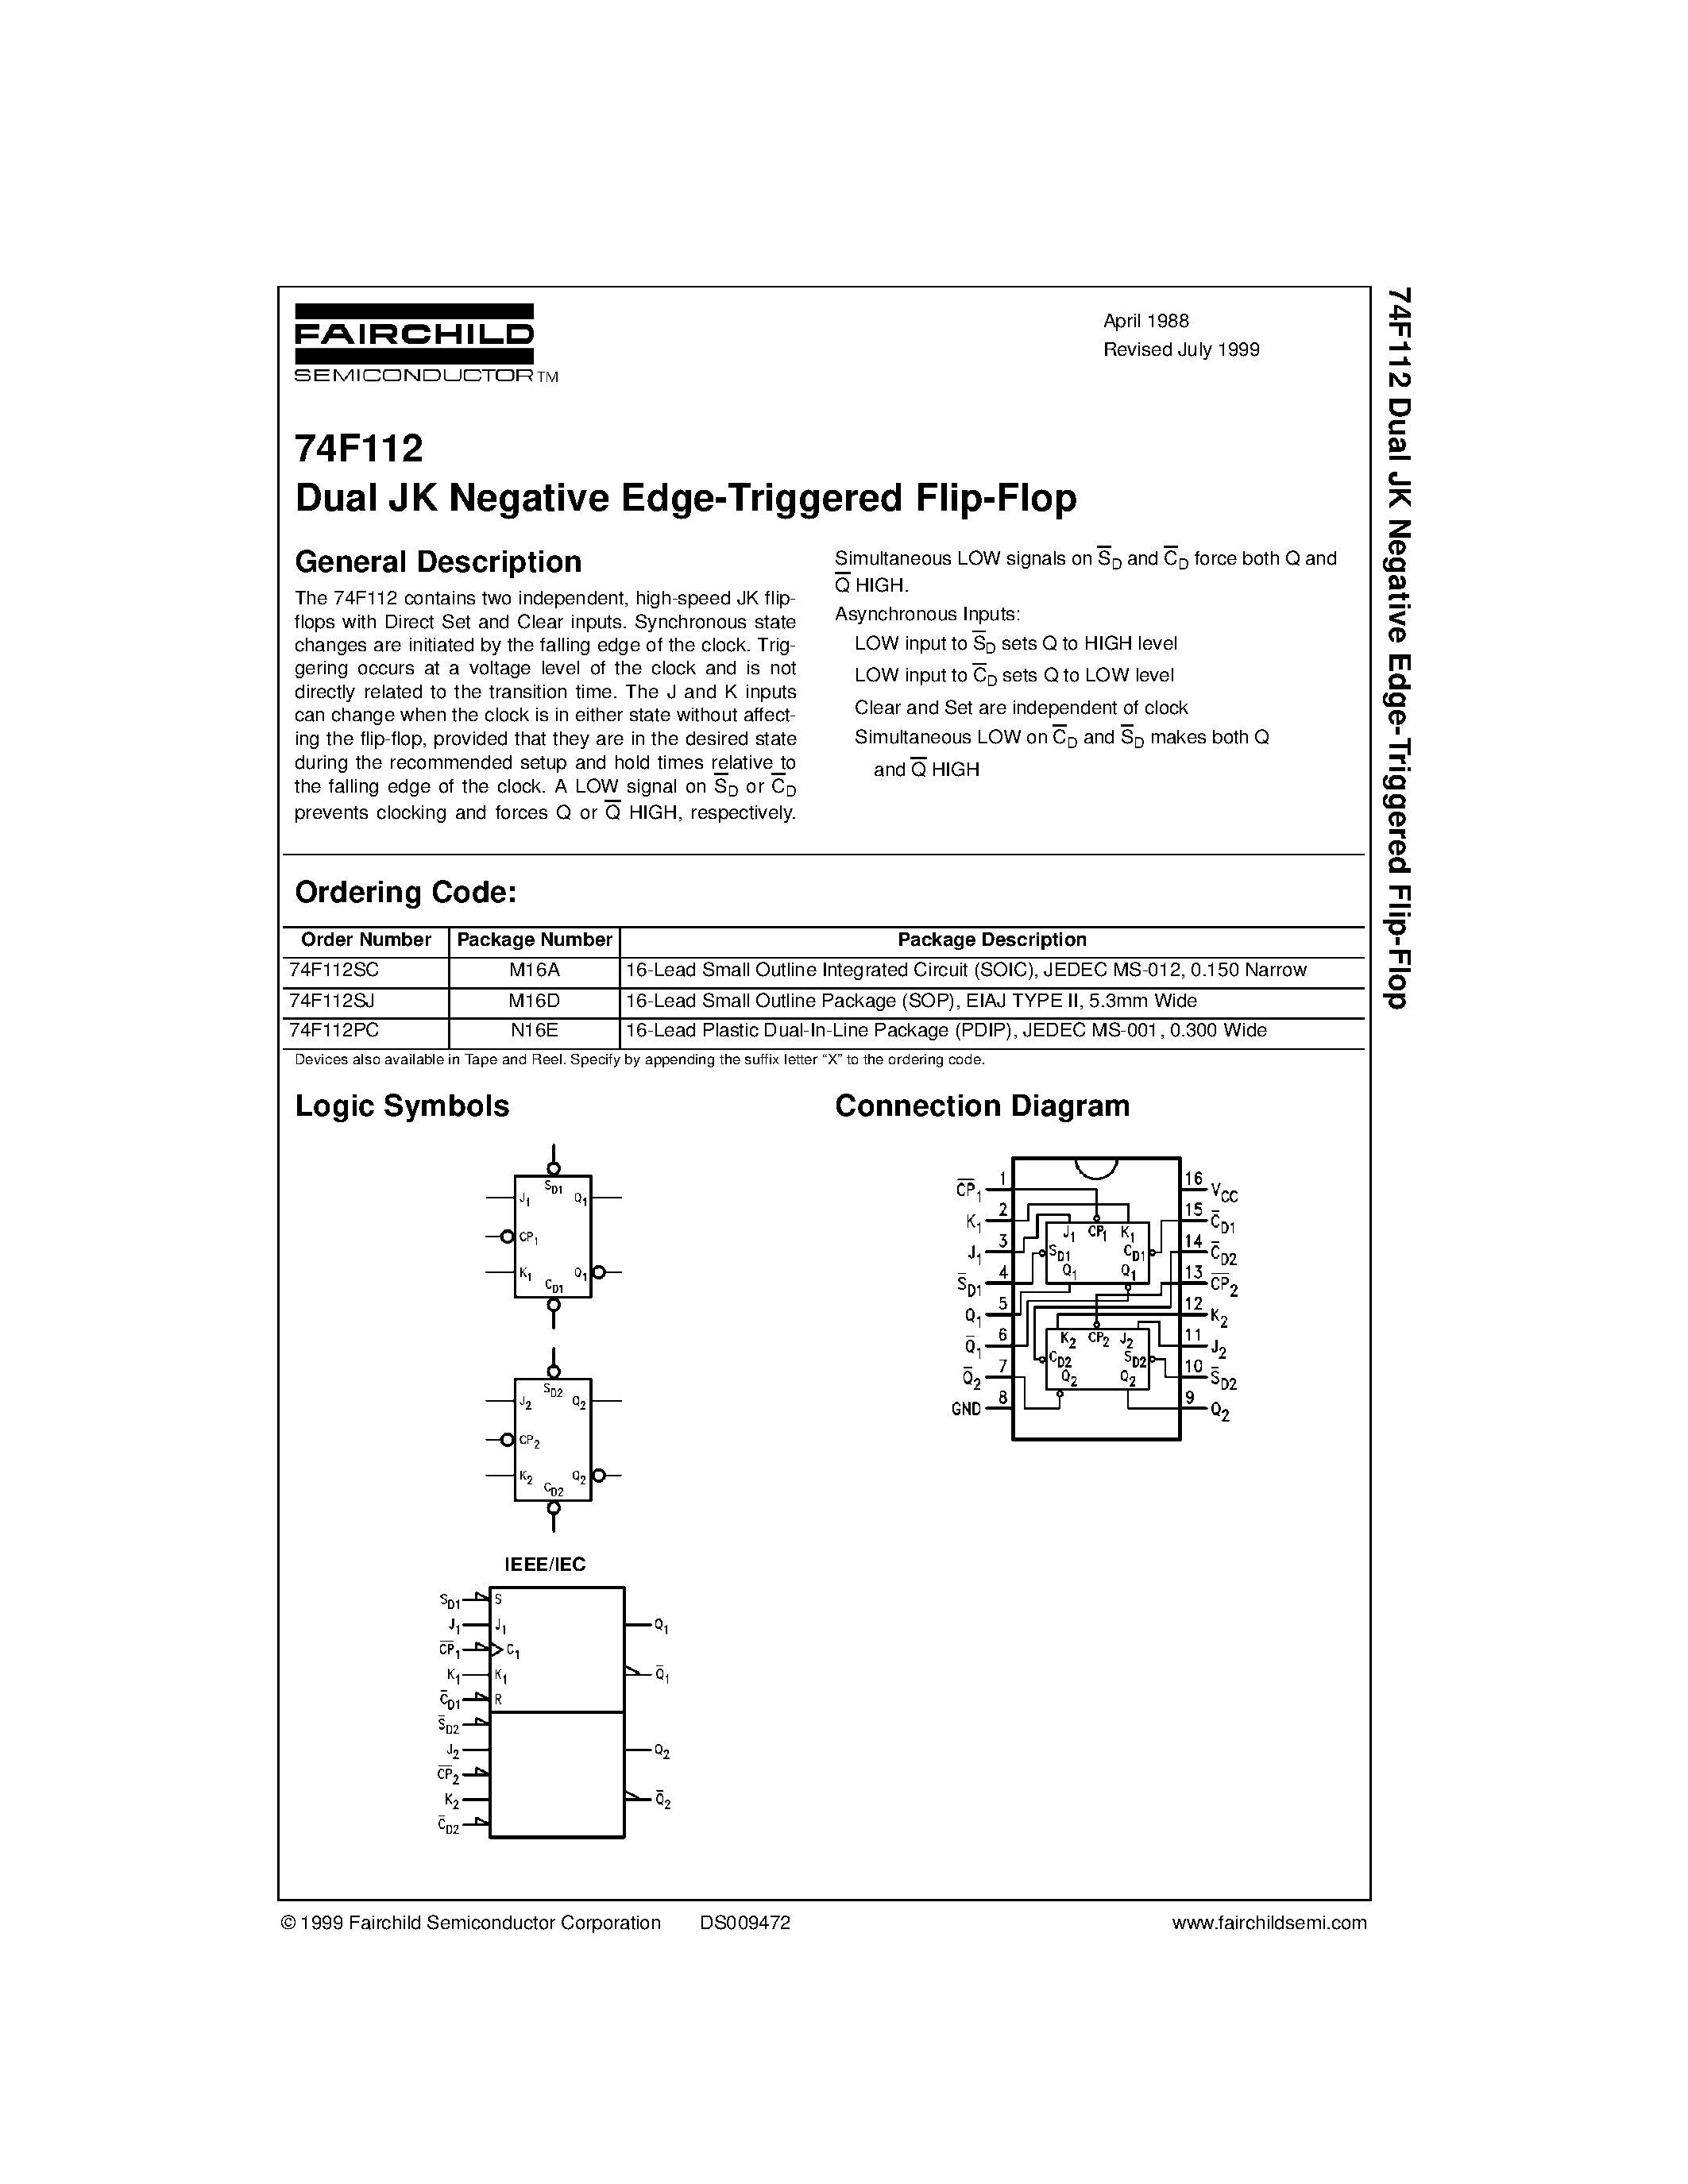 Datasheet 74F112 - Dual JK Negative Edge-Triggered Flip-Flop page 1